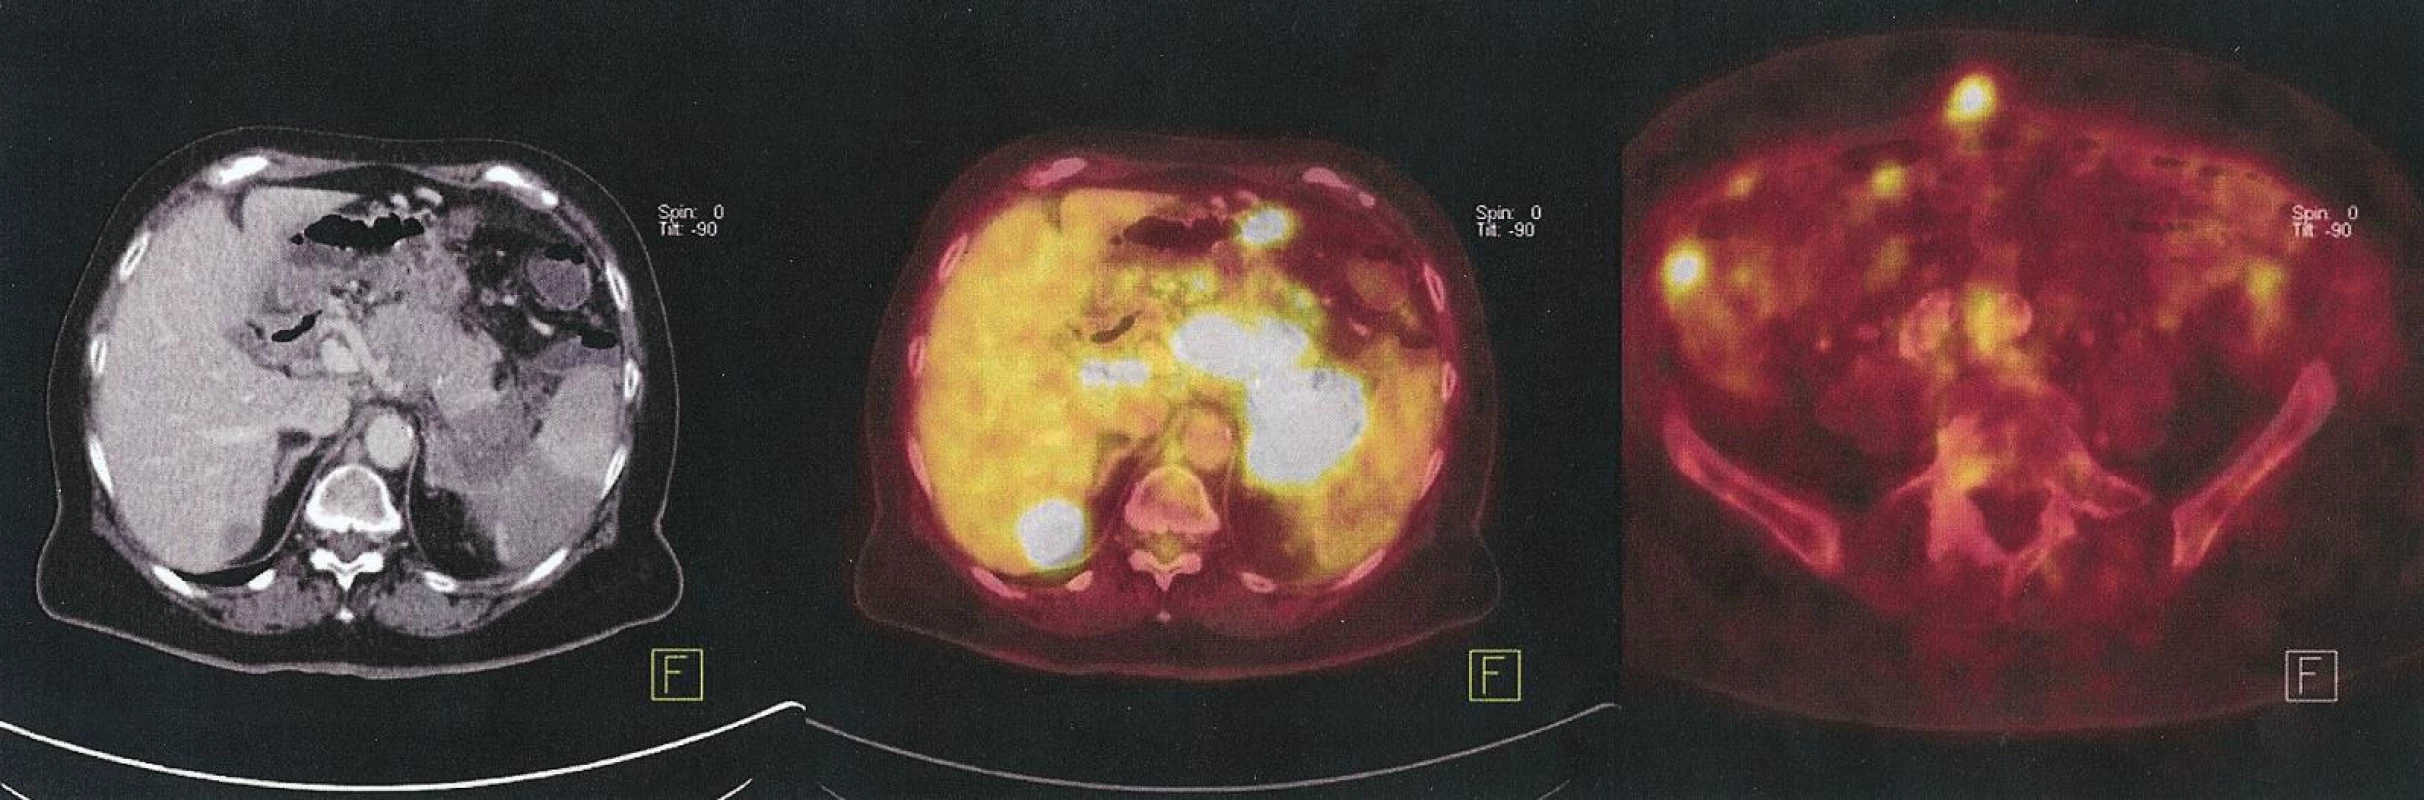 Generalizovaný karcinom kaudy pankreatu s metastázami jater a peritonea, paliativní léčba
Fig. 2. Generalized pancreatic cancer of the cauda with liver and peritoneal metastases, palliative treatment